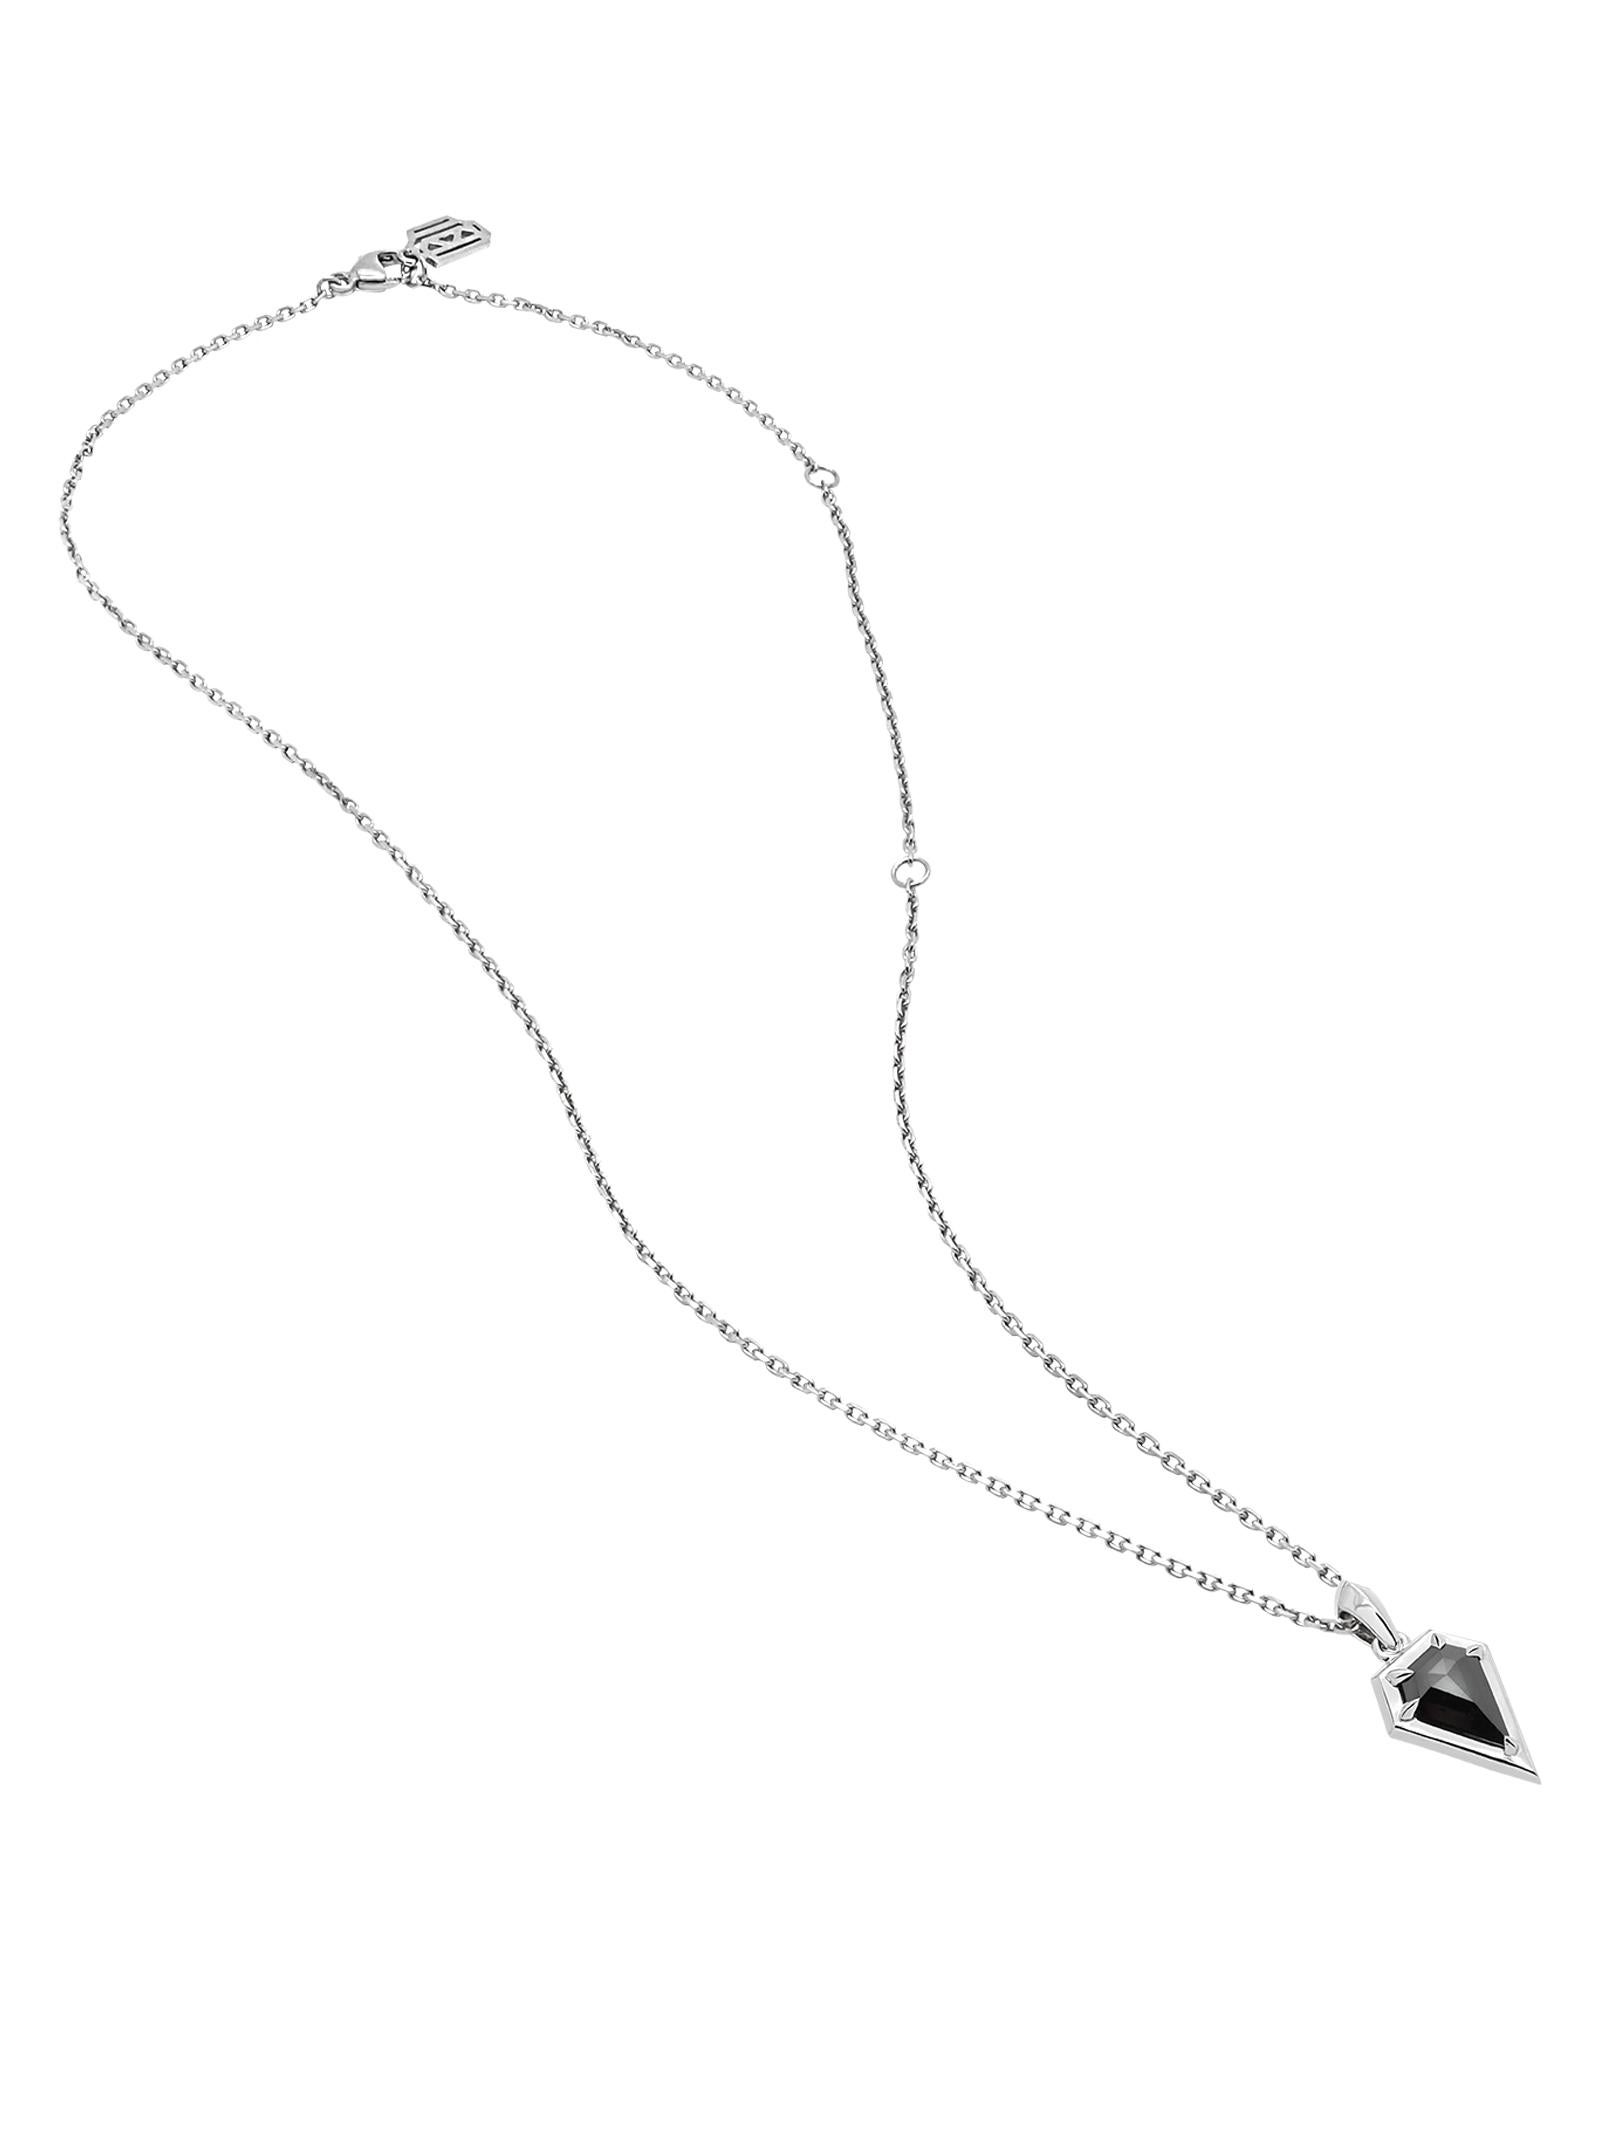 • 18-Karat White Gold Amulet Pendant Necklace
• Shield-Cut Natural Black Diamond, 1.20 Carat Weight
• Pendant Length, 22mm
• Includes an adjustable 12